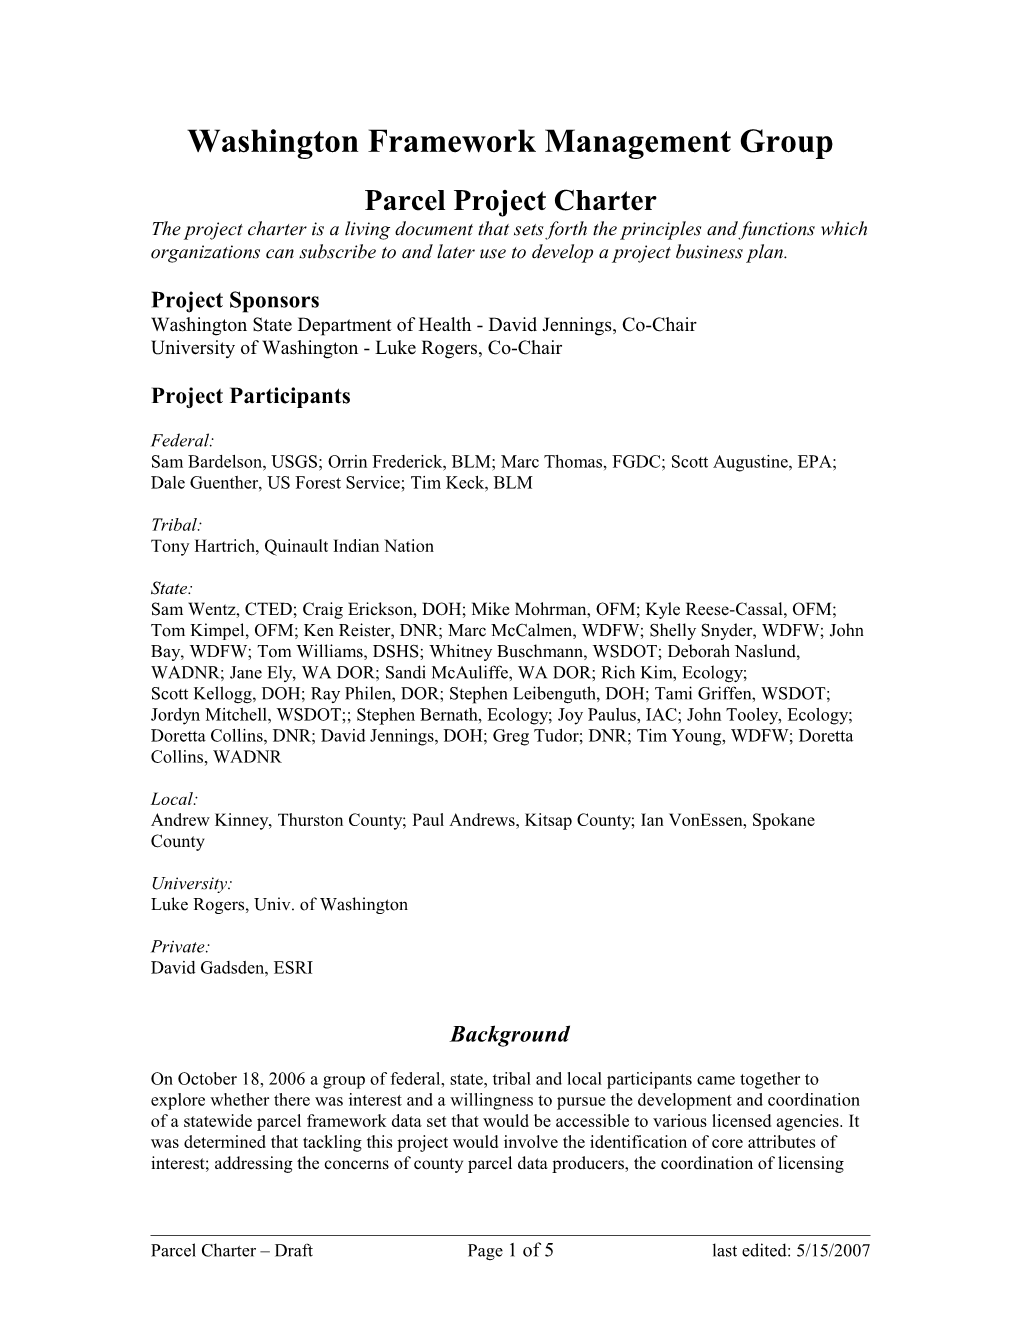 Washington Framework Management Group Parcel Project Charter